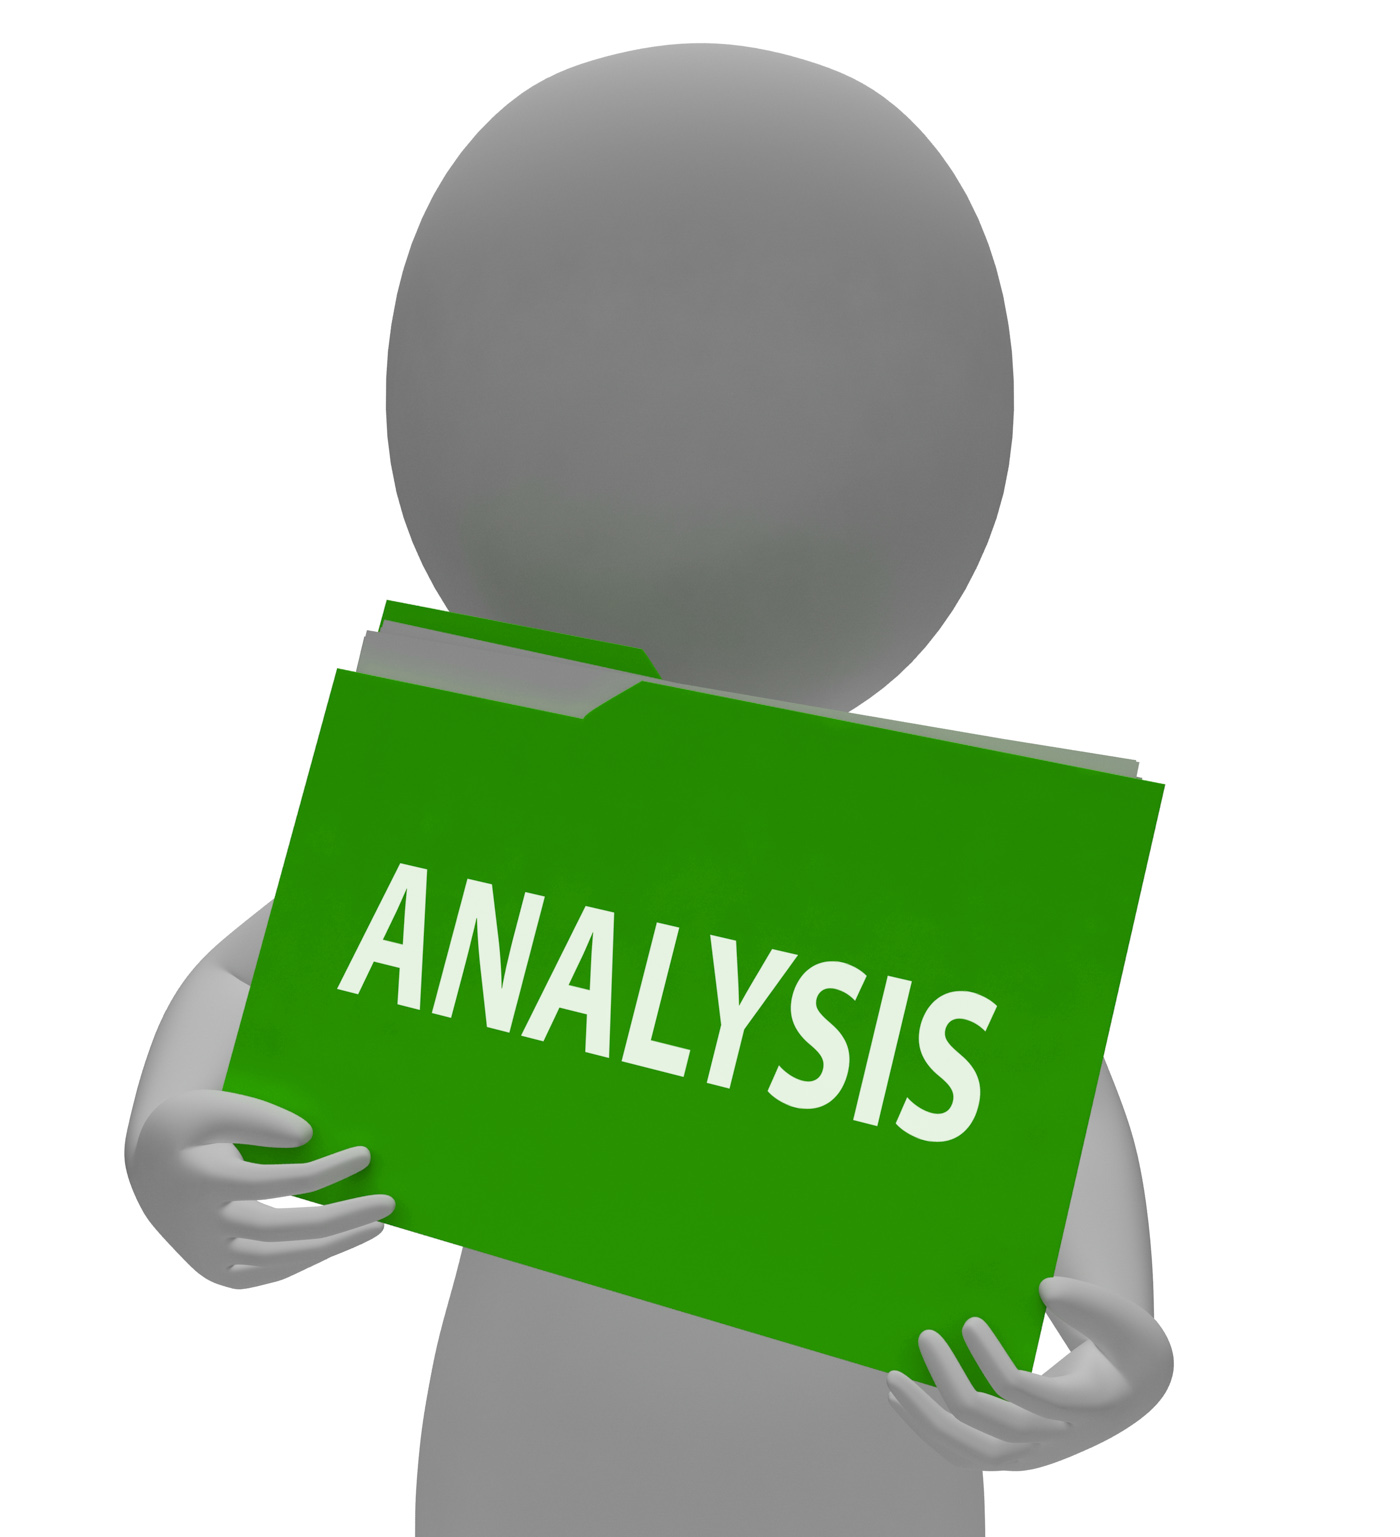 Analysis Folder Indicates Data Analytics And Organize 3d Rendering, 3drendering, Folder, Research, Paperwork, HQ Photo